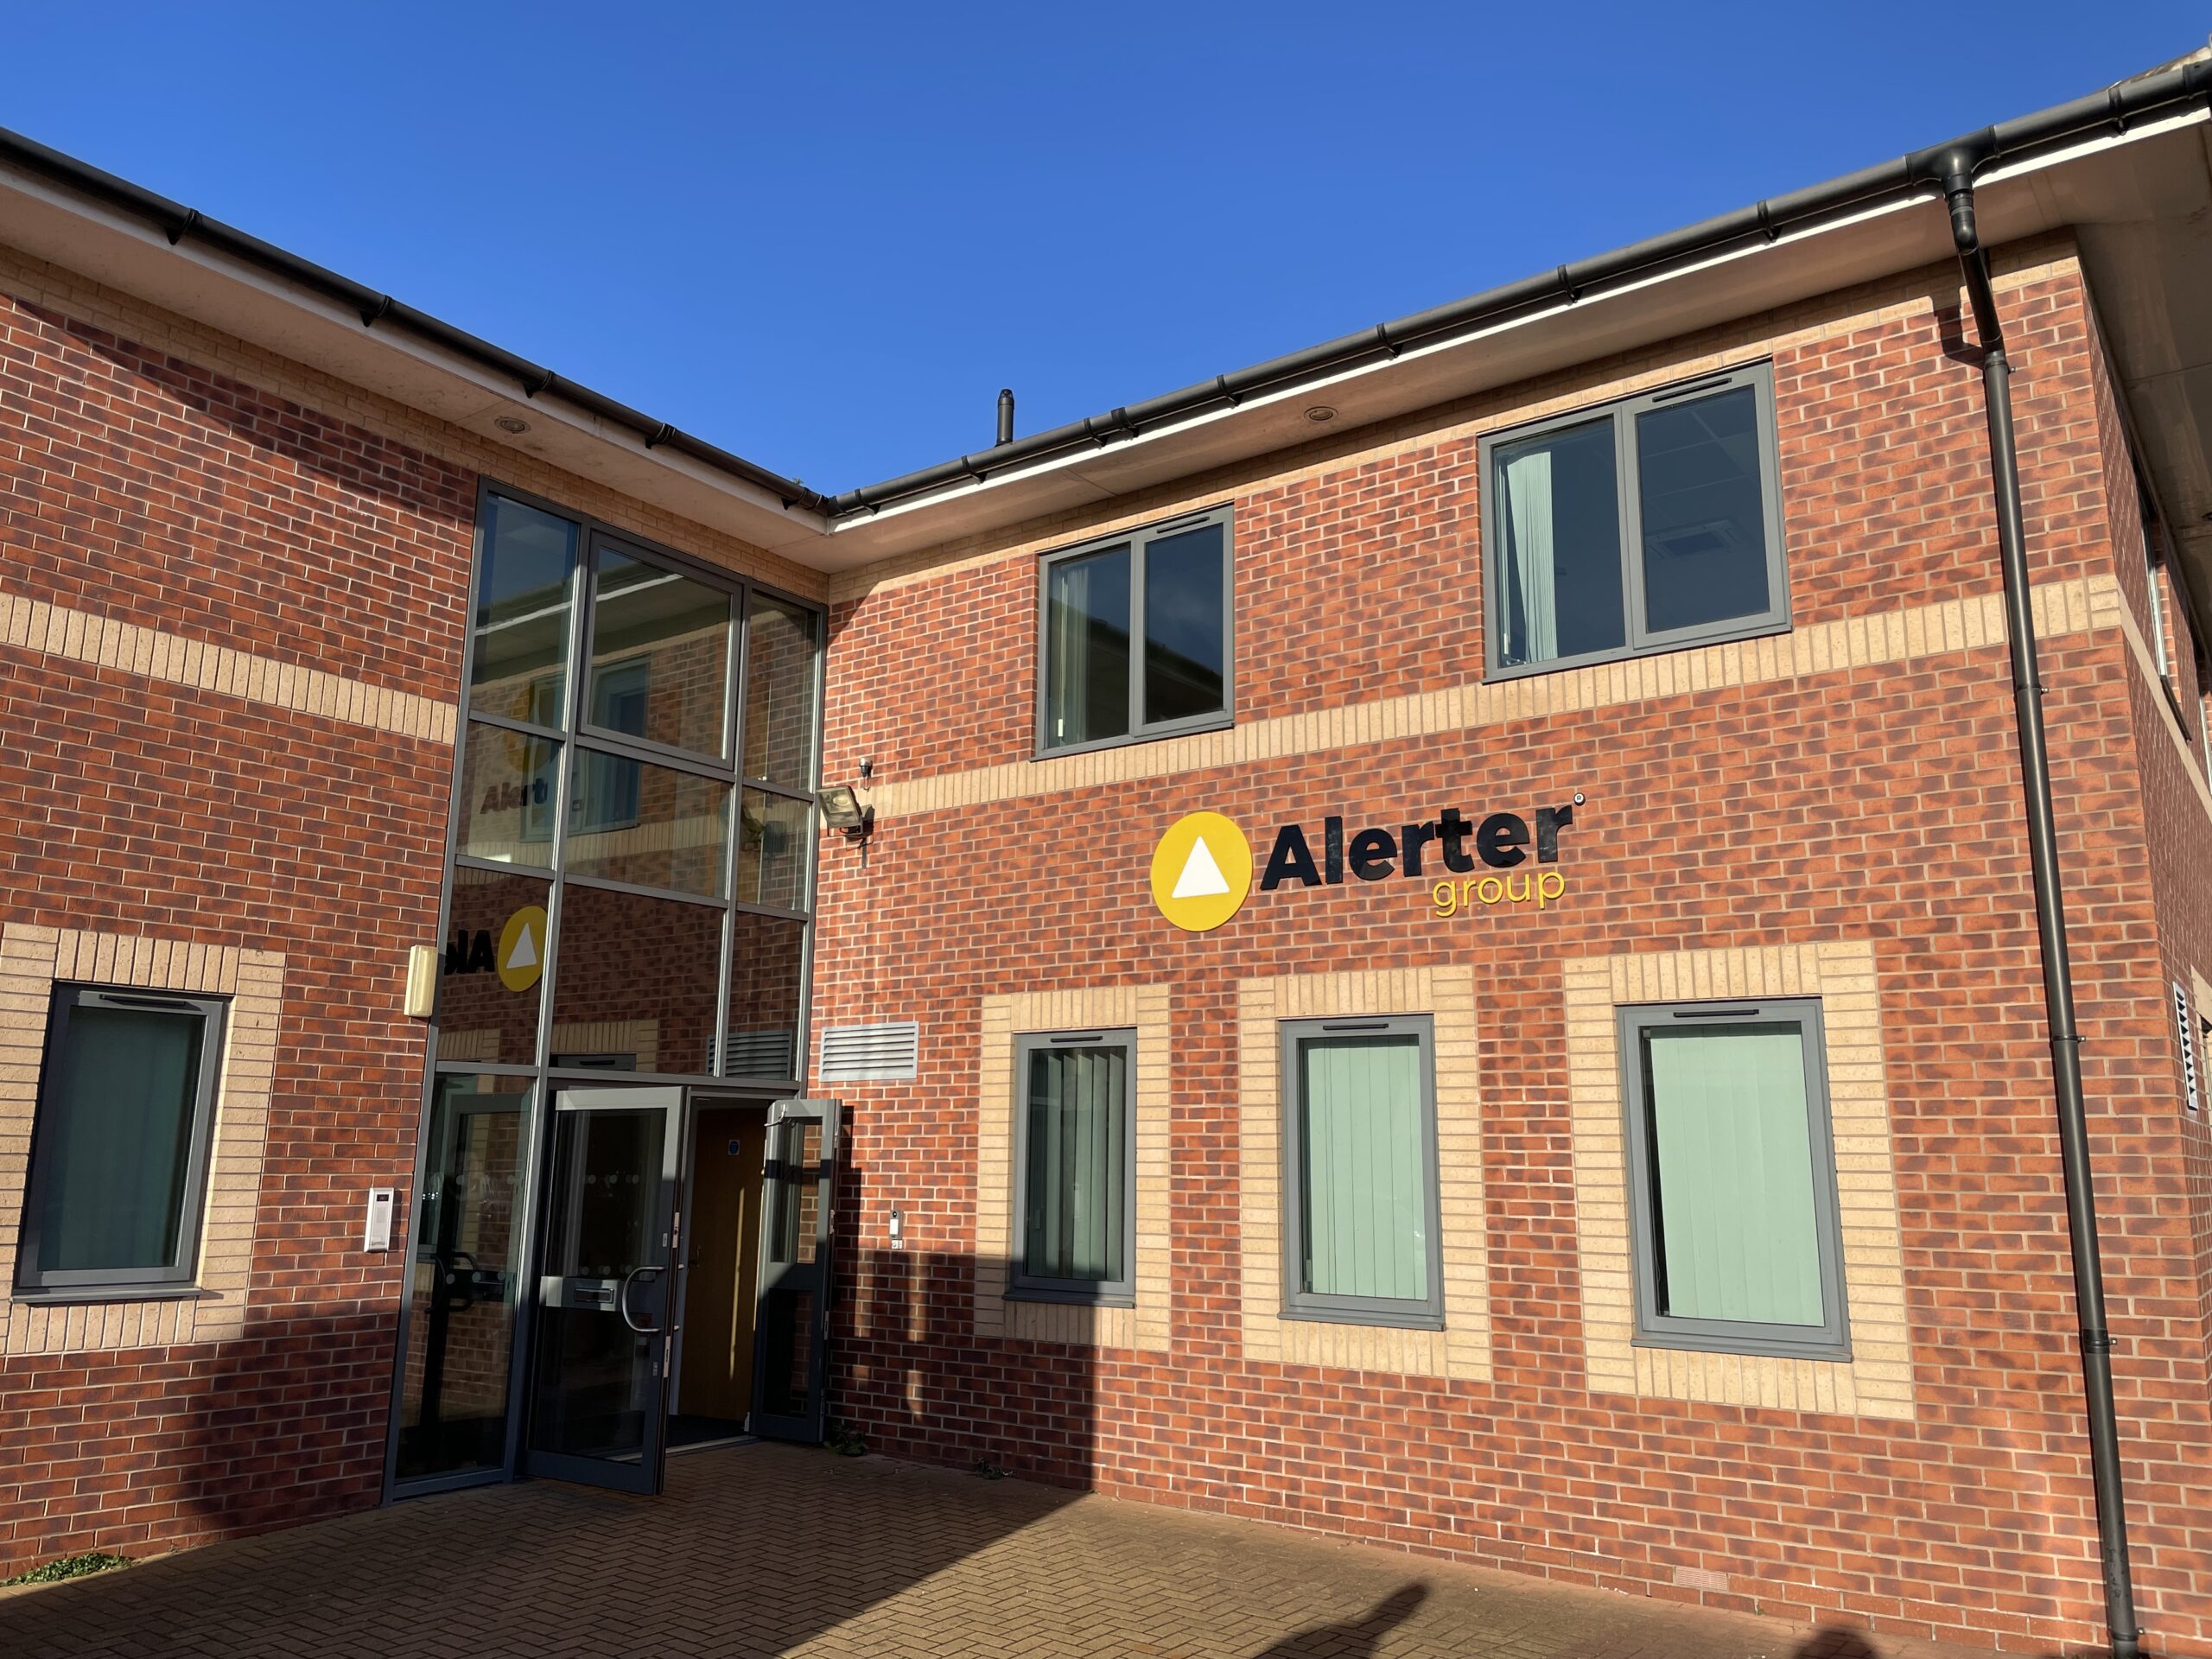 Alerter Group moves to new, single premises